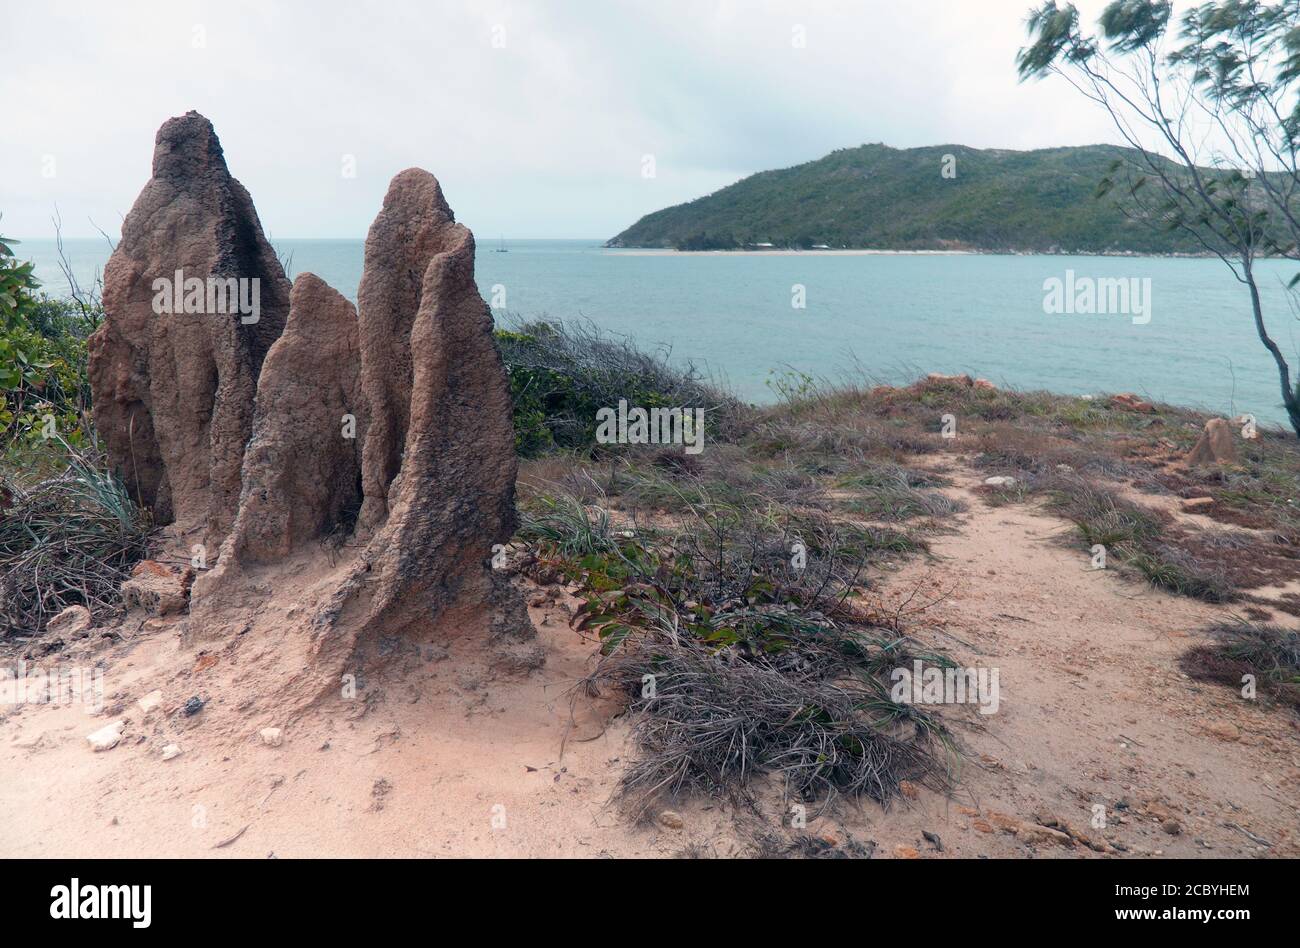 Termite mound on Cape Weymouth looking across to Restoration Island, Lockhart River, Cape York Peninsula, Queensland, Australia Stock Photo